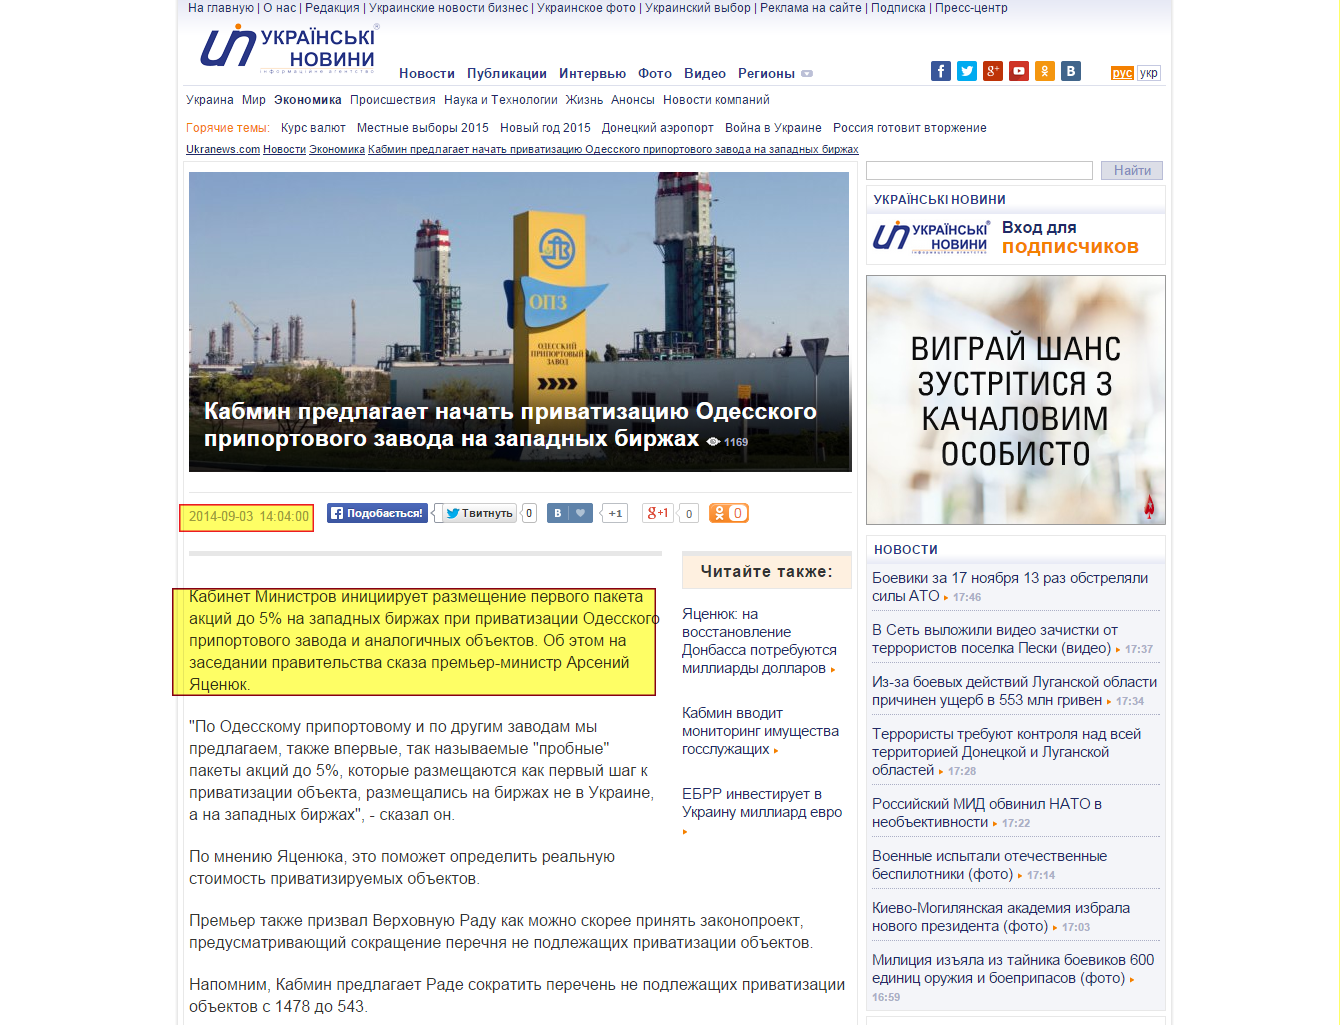 http://ukranews.com/ru/news/economics/2014/09/03/134851